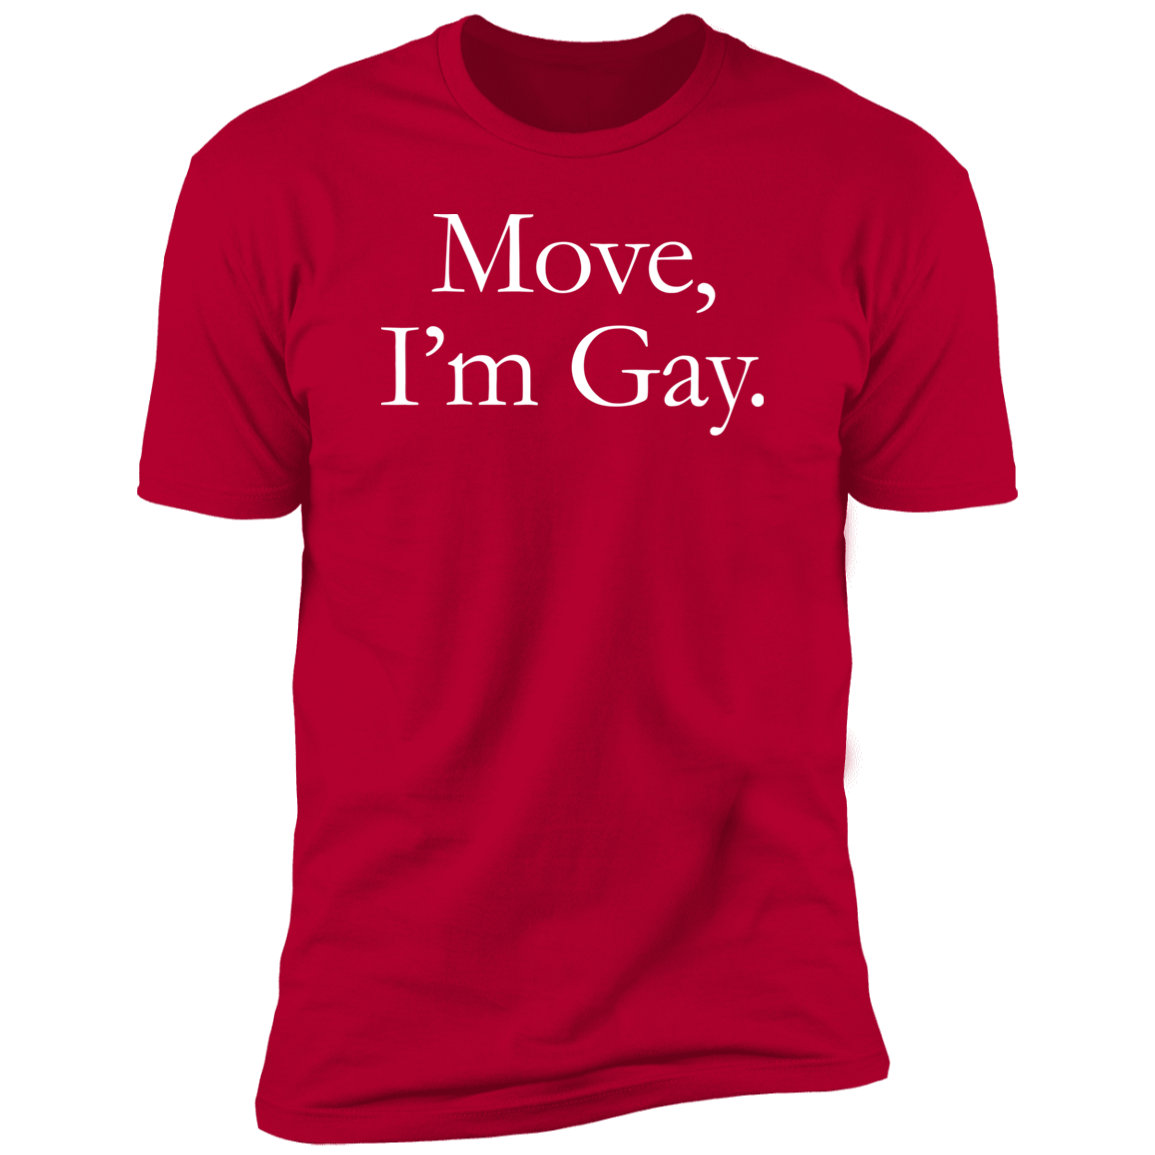 Hustler MOVE, I'M GAY T-Shirt